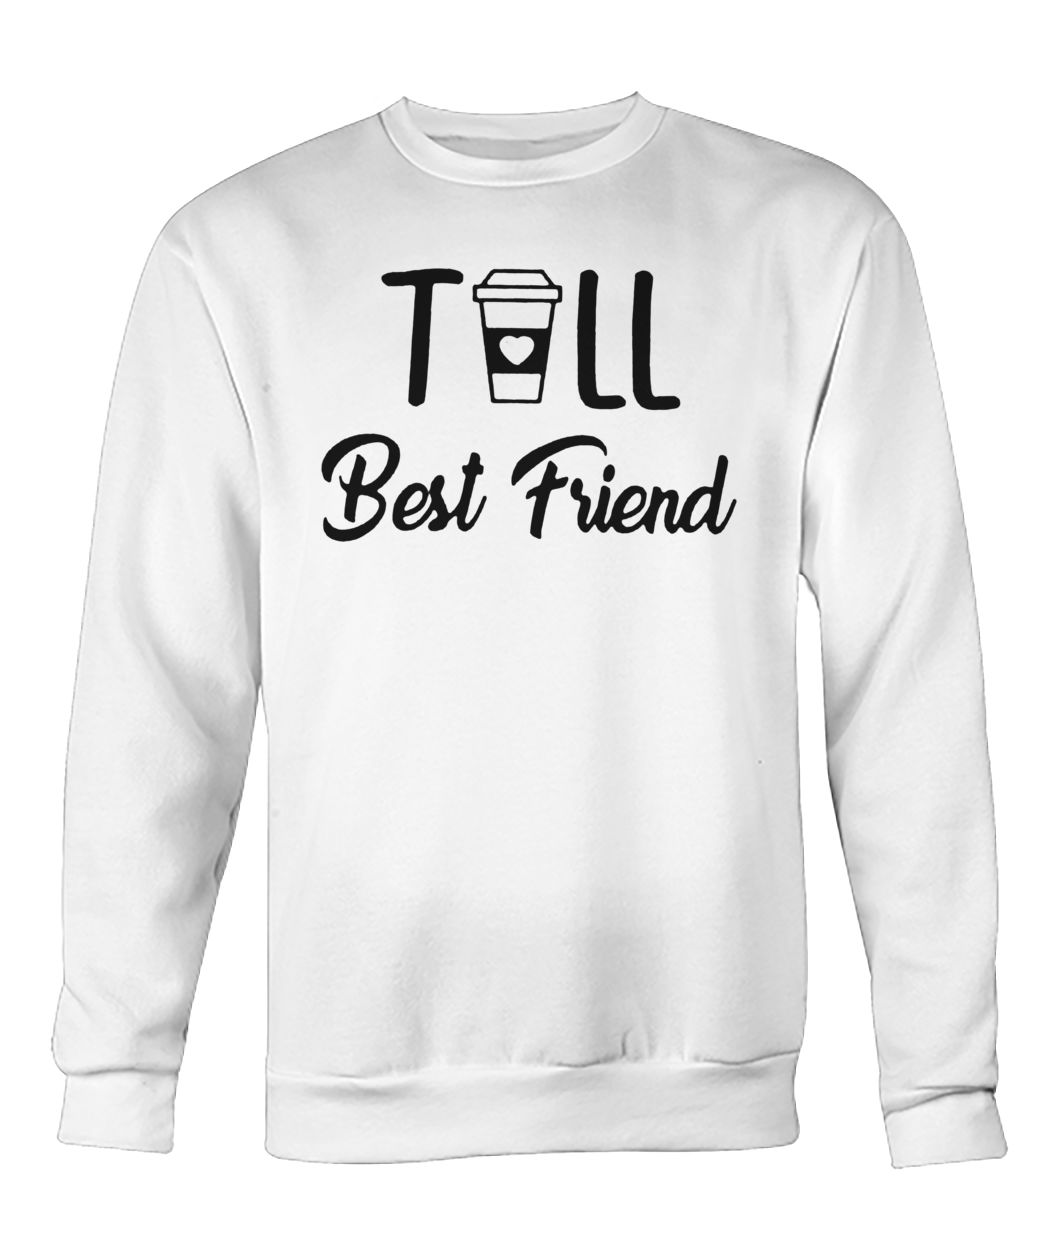 Coffee tall best friend crew neck sweatshirt